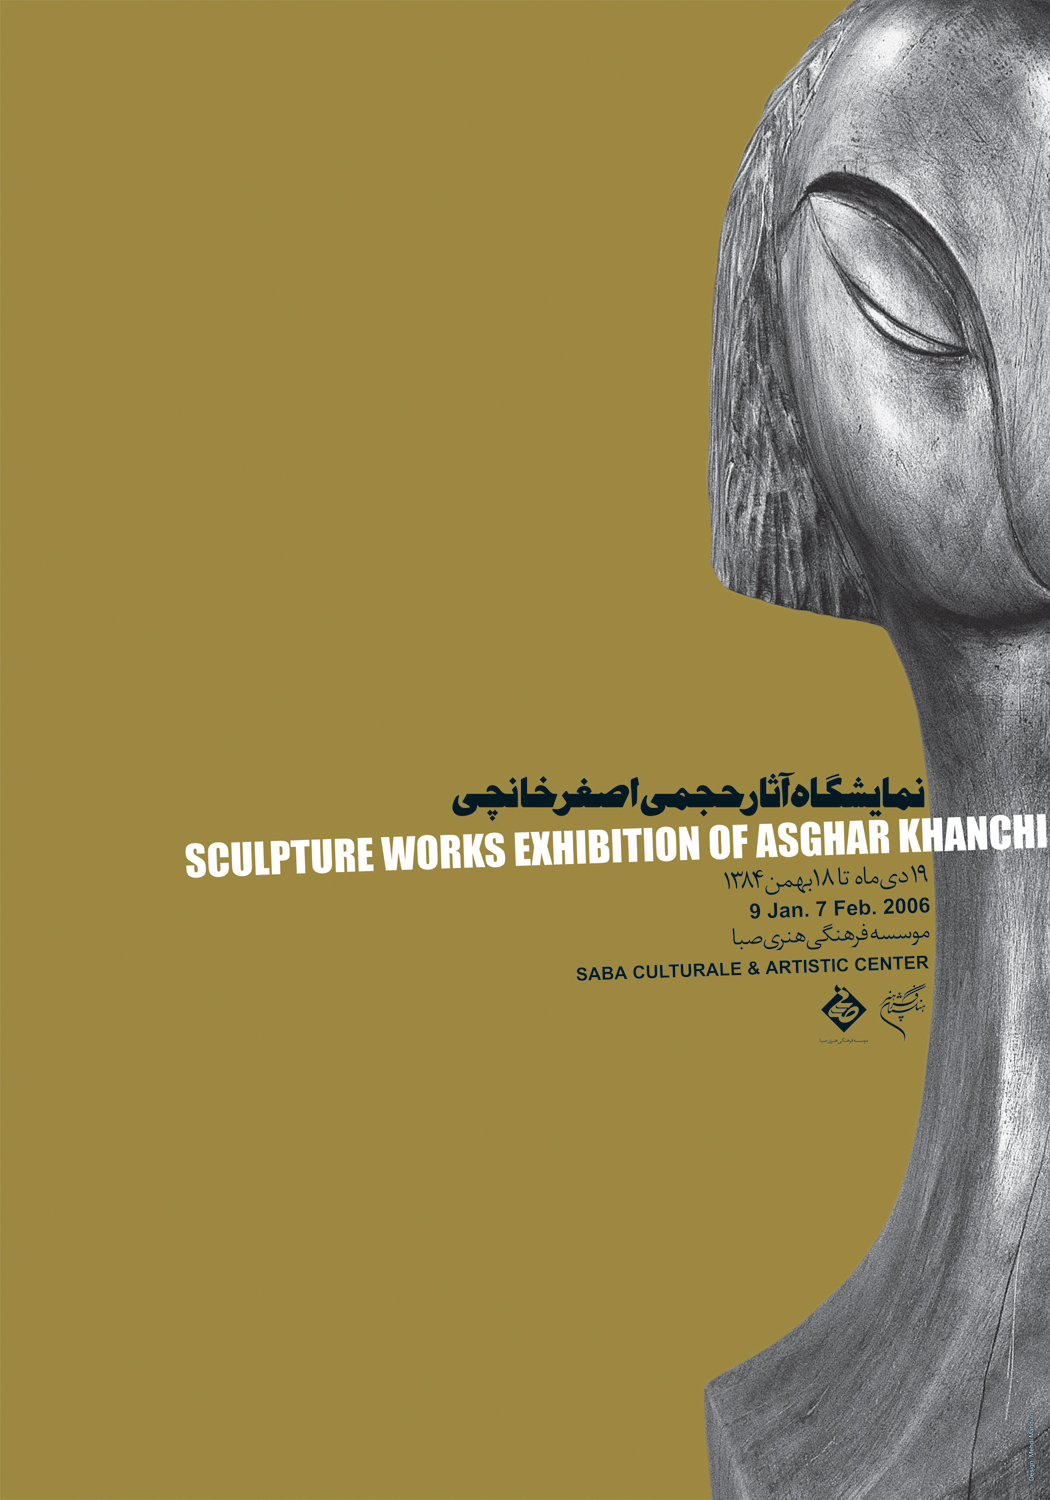 Mehdi-Mahdian-Sculpture-Exhibition-of-Asghar-Khanchi-2006